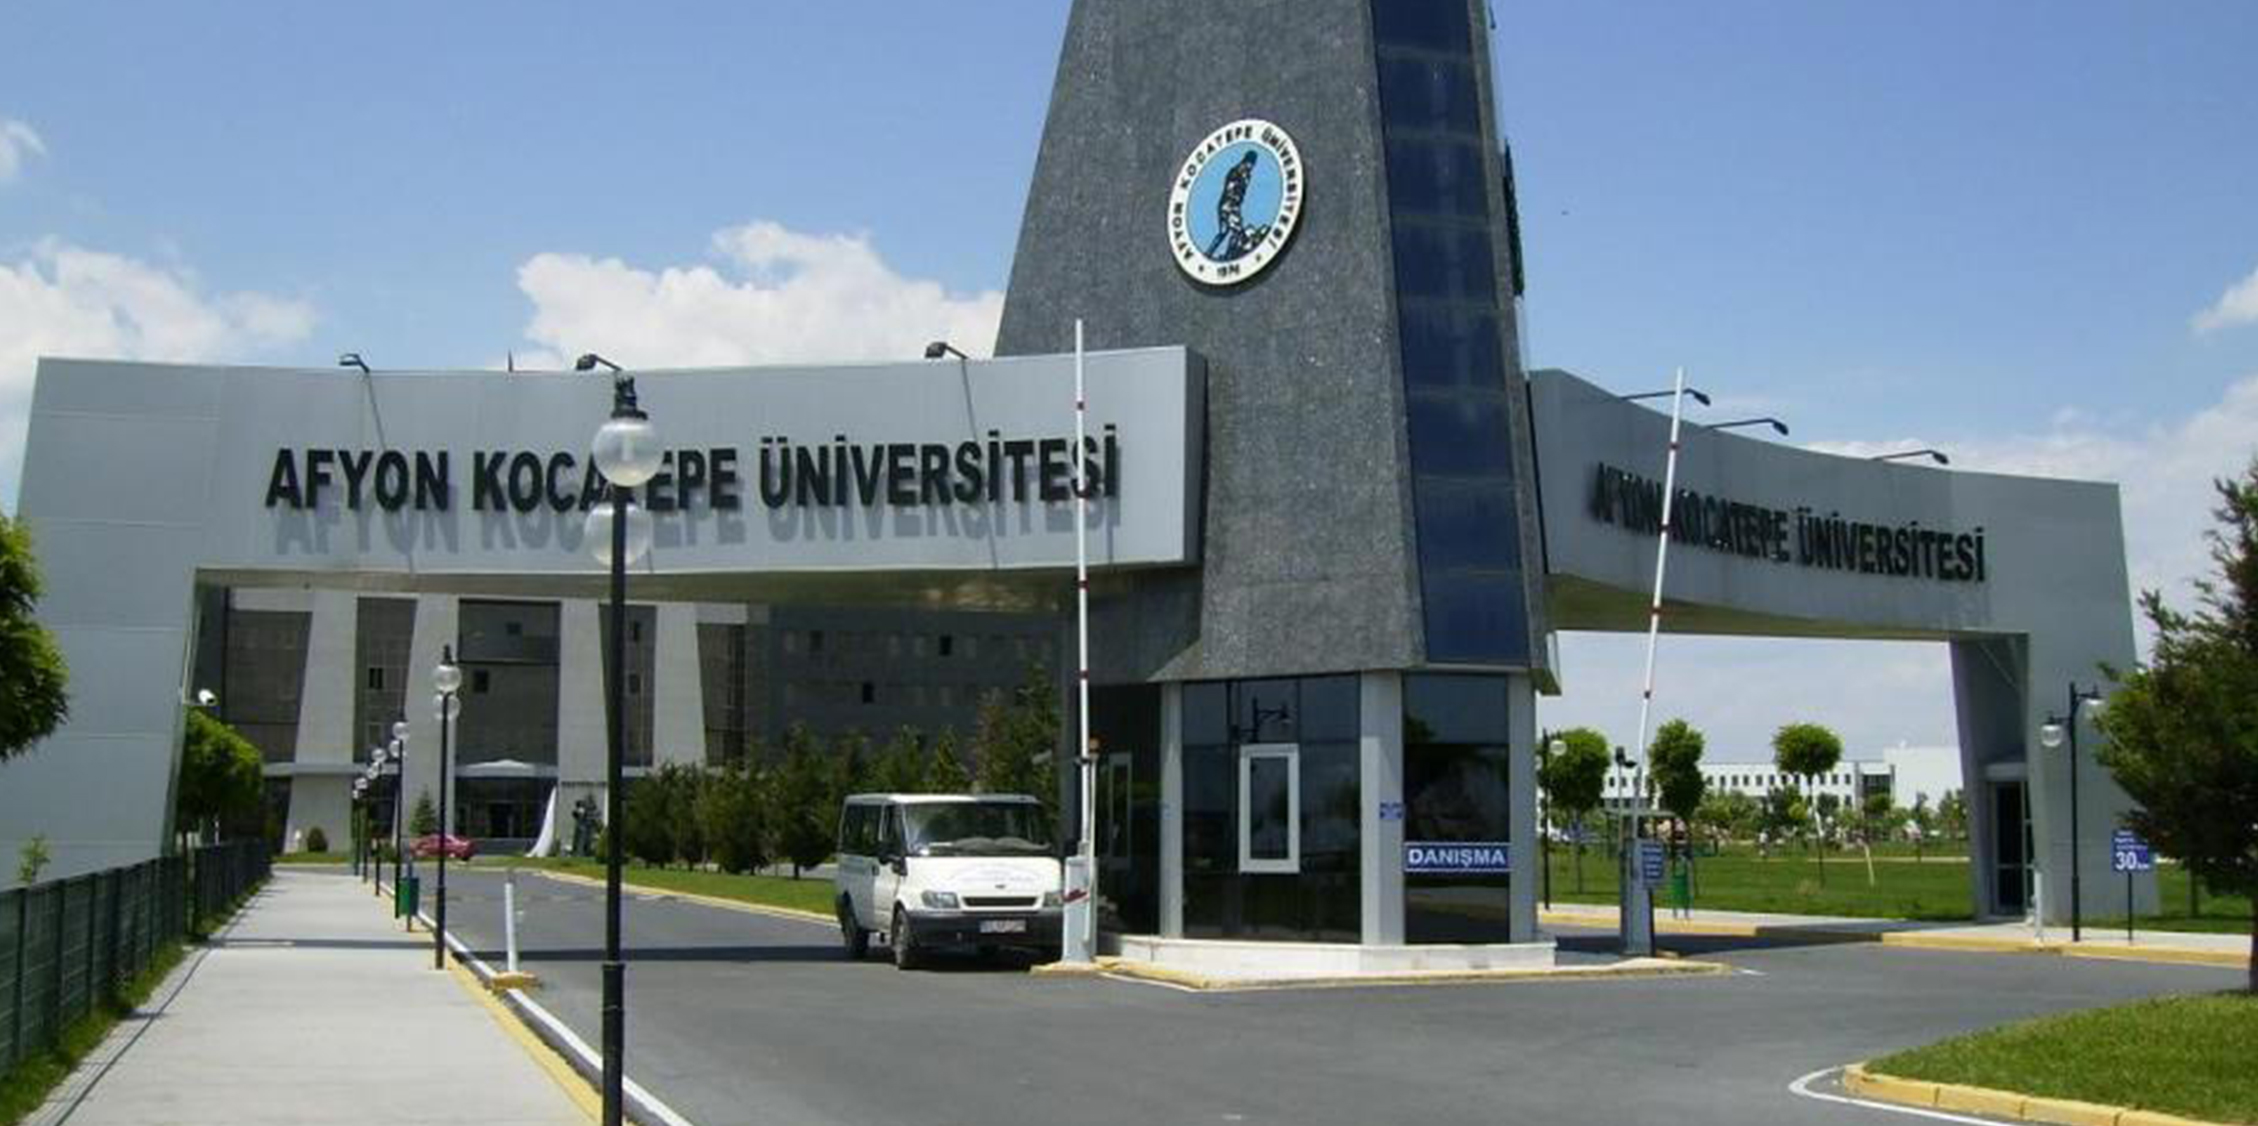 afyonkocatepe universitesi find and study 1 - Afyon Kocatepe Universiteti